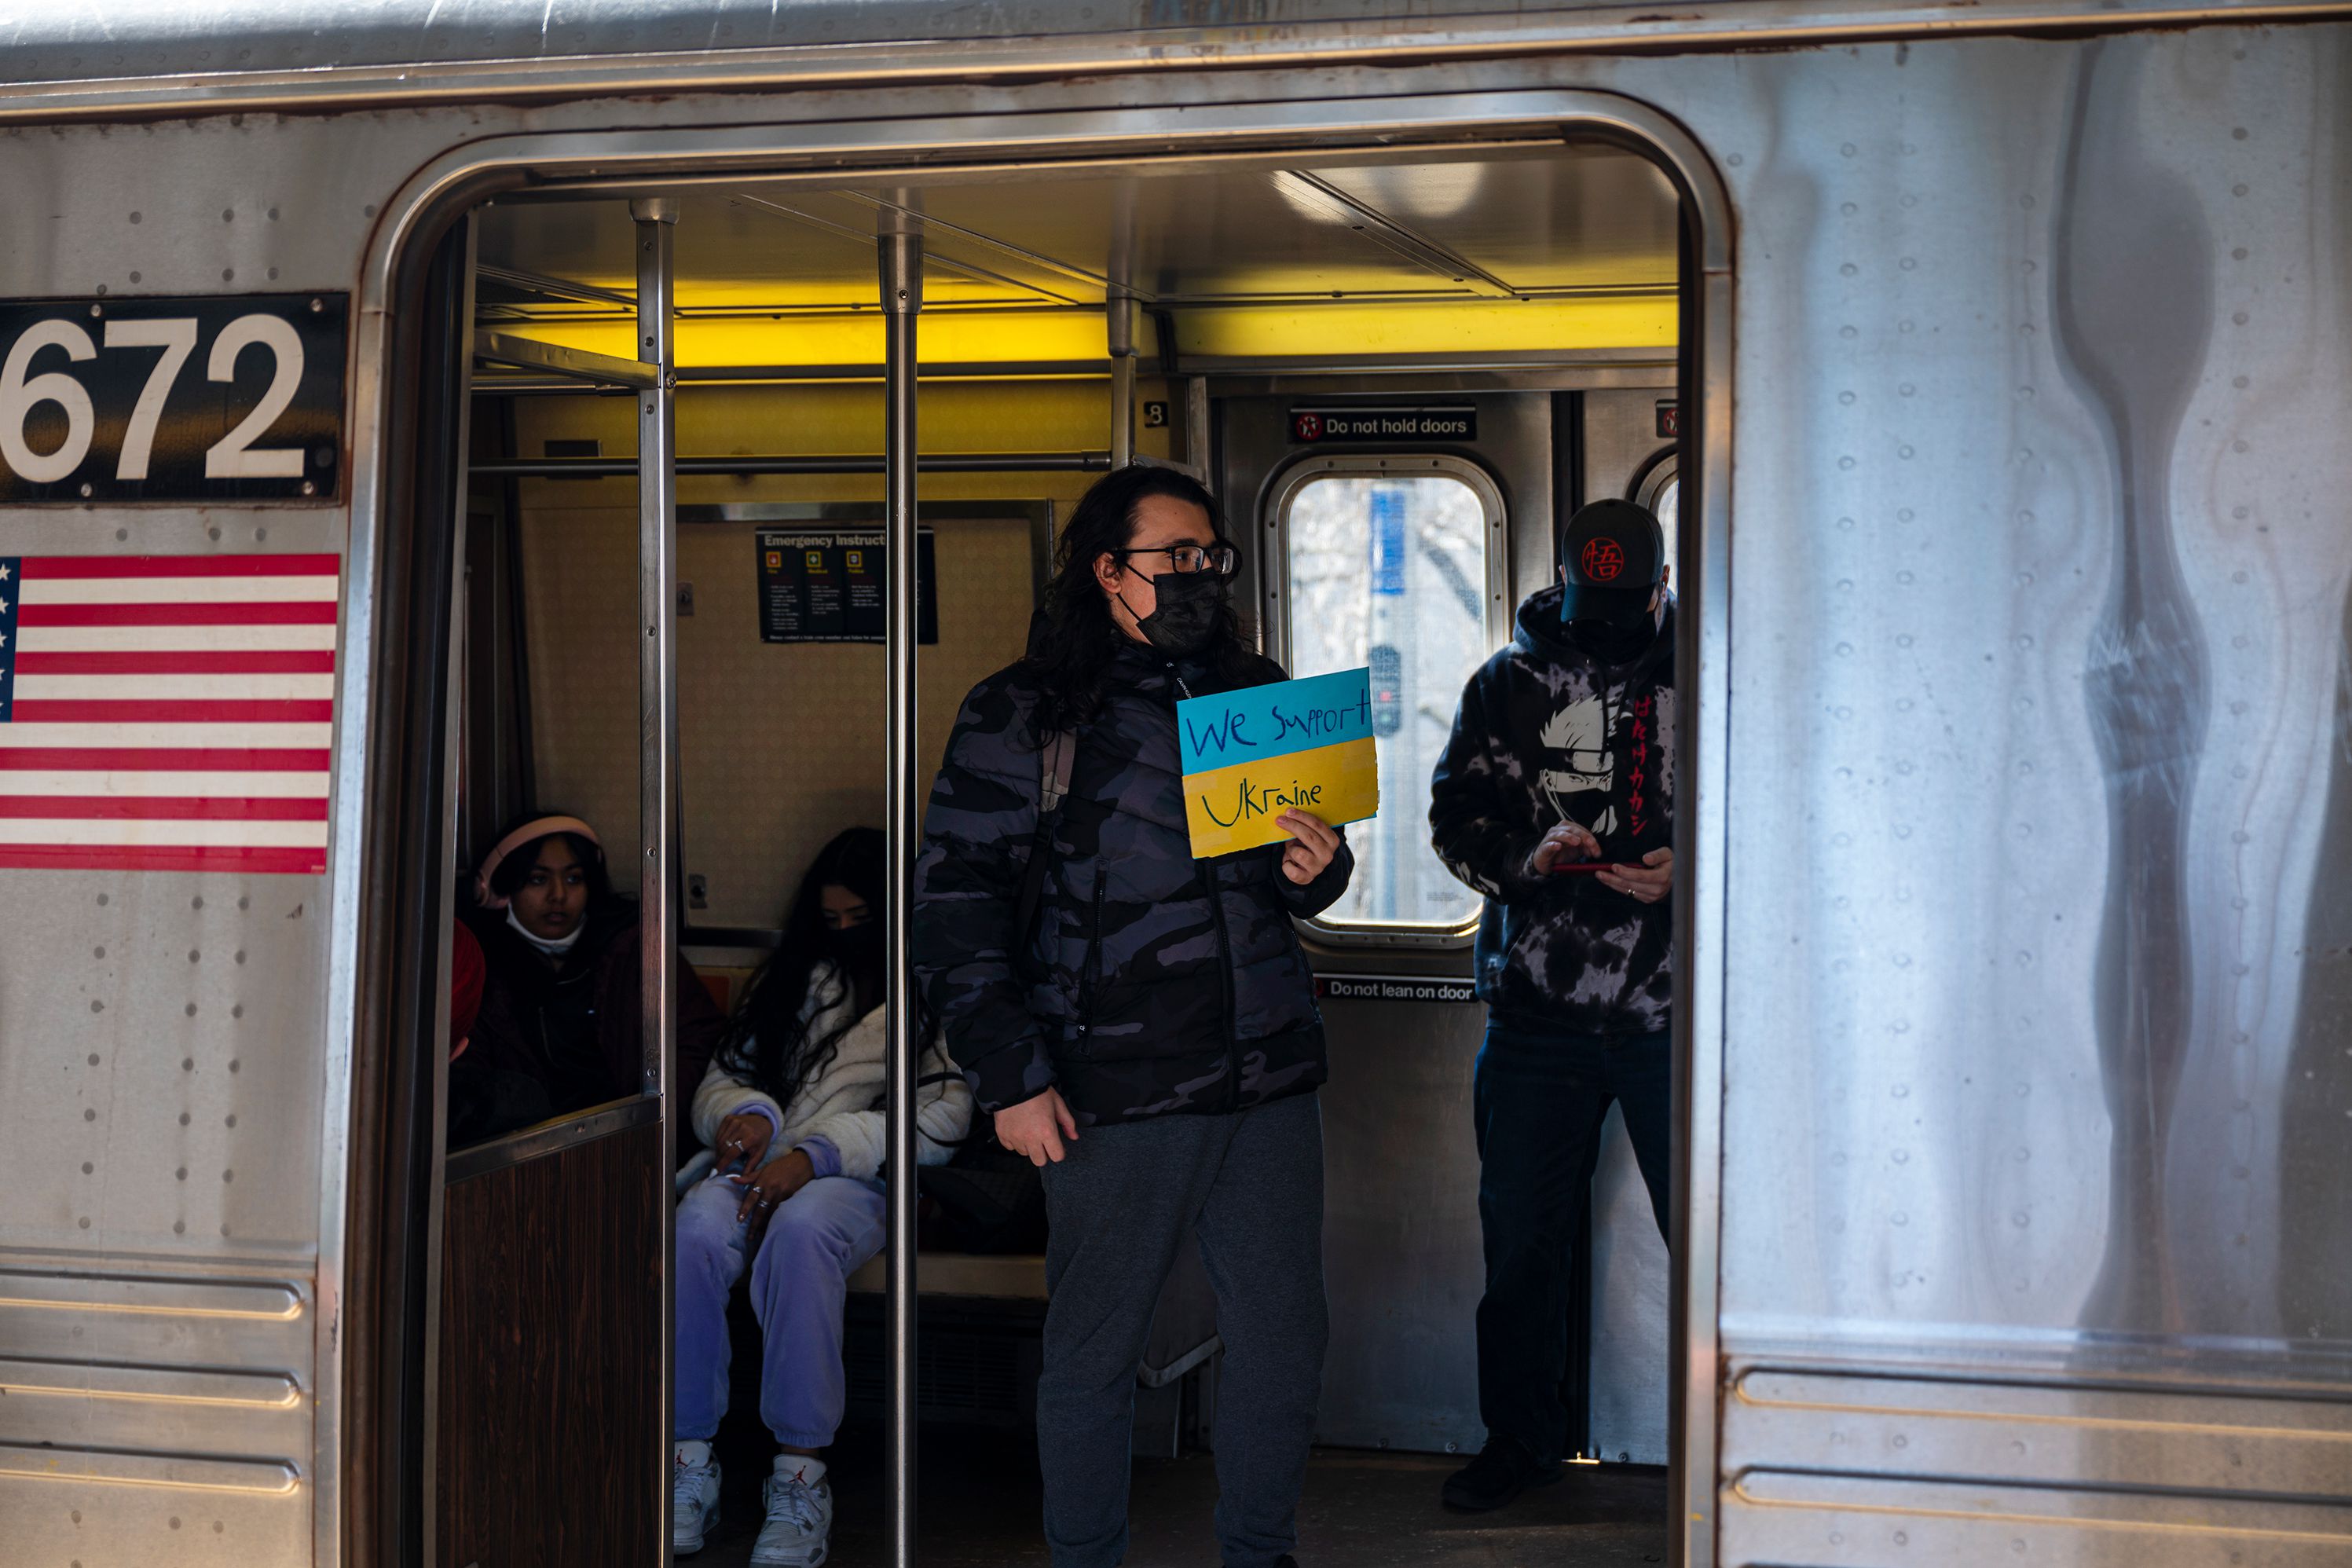 A Ukraine supporter rides a Q train from Brighton Beach, March 11, 2022.